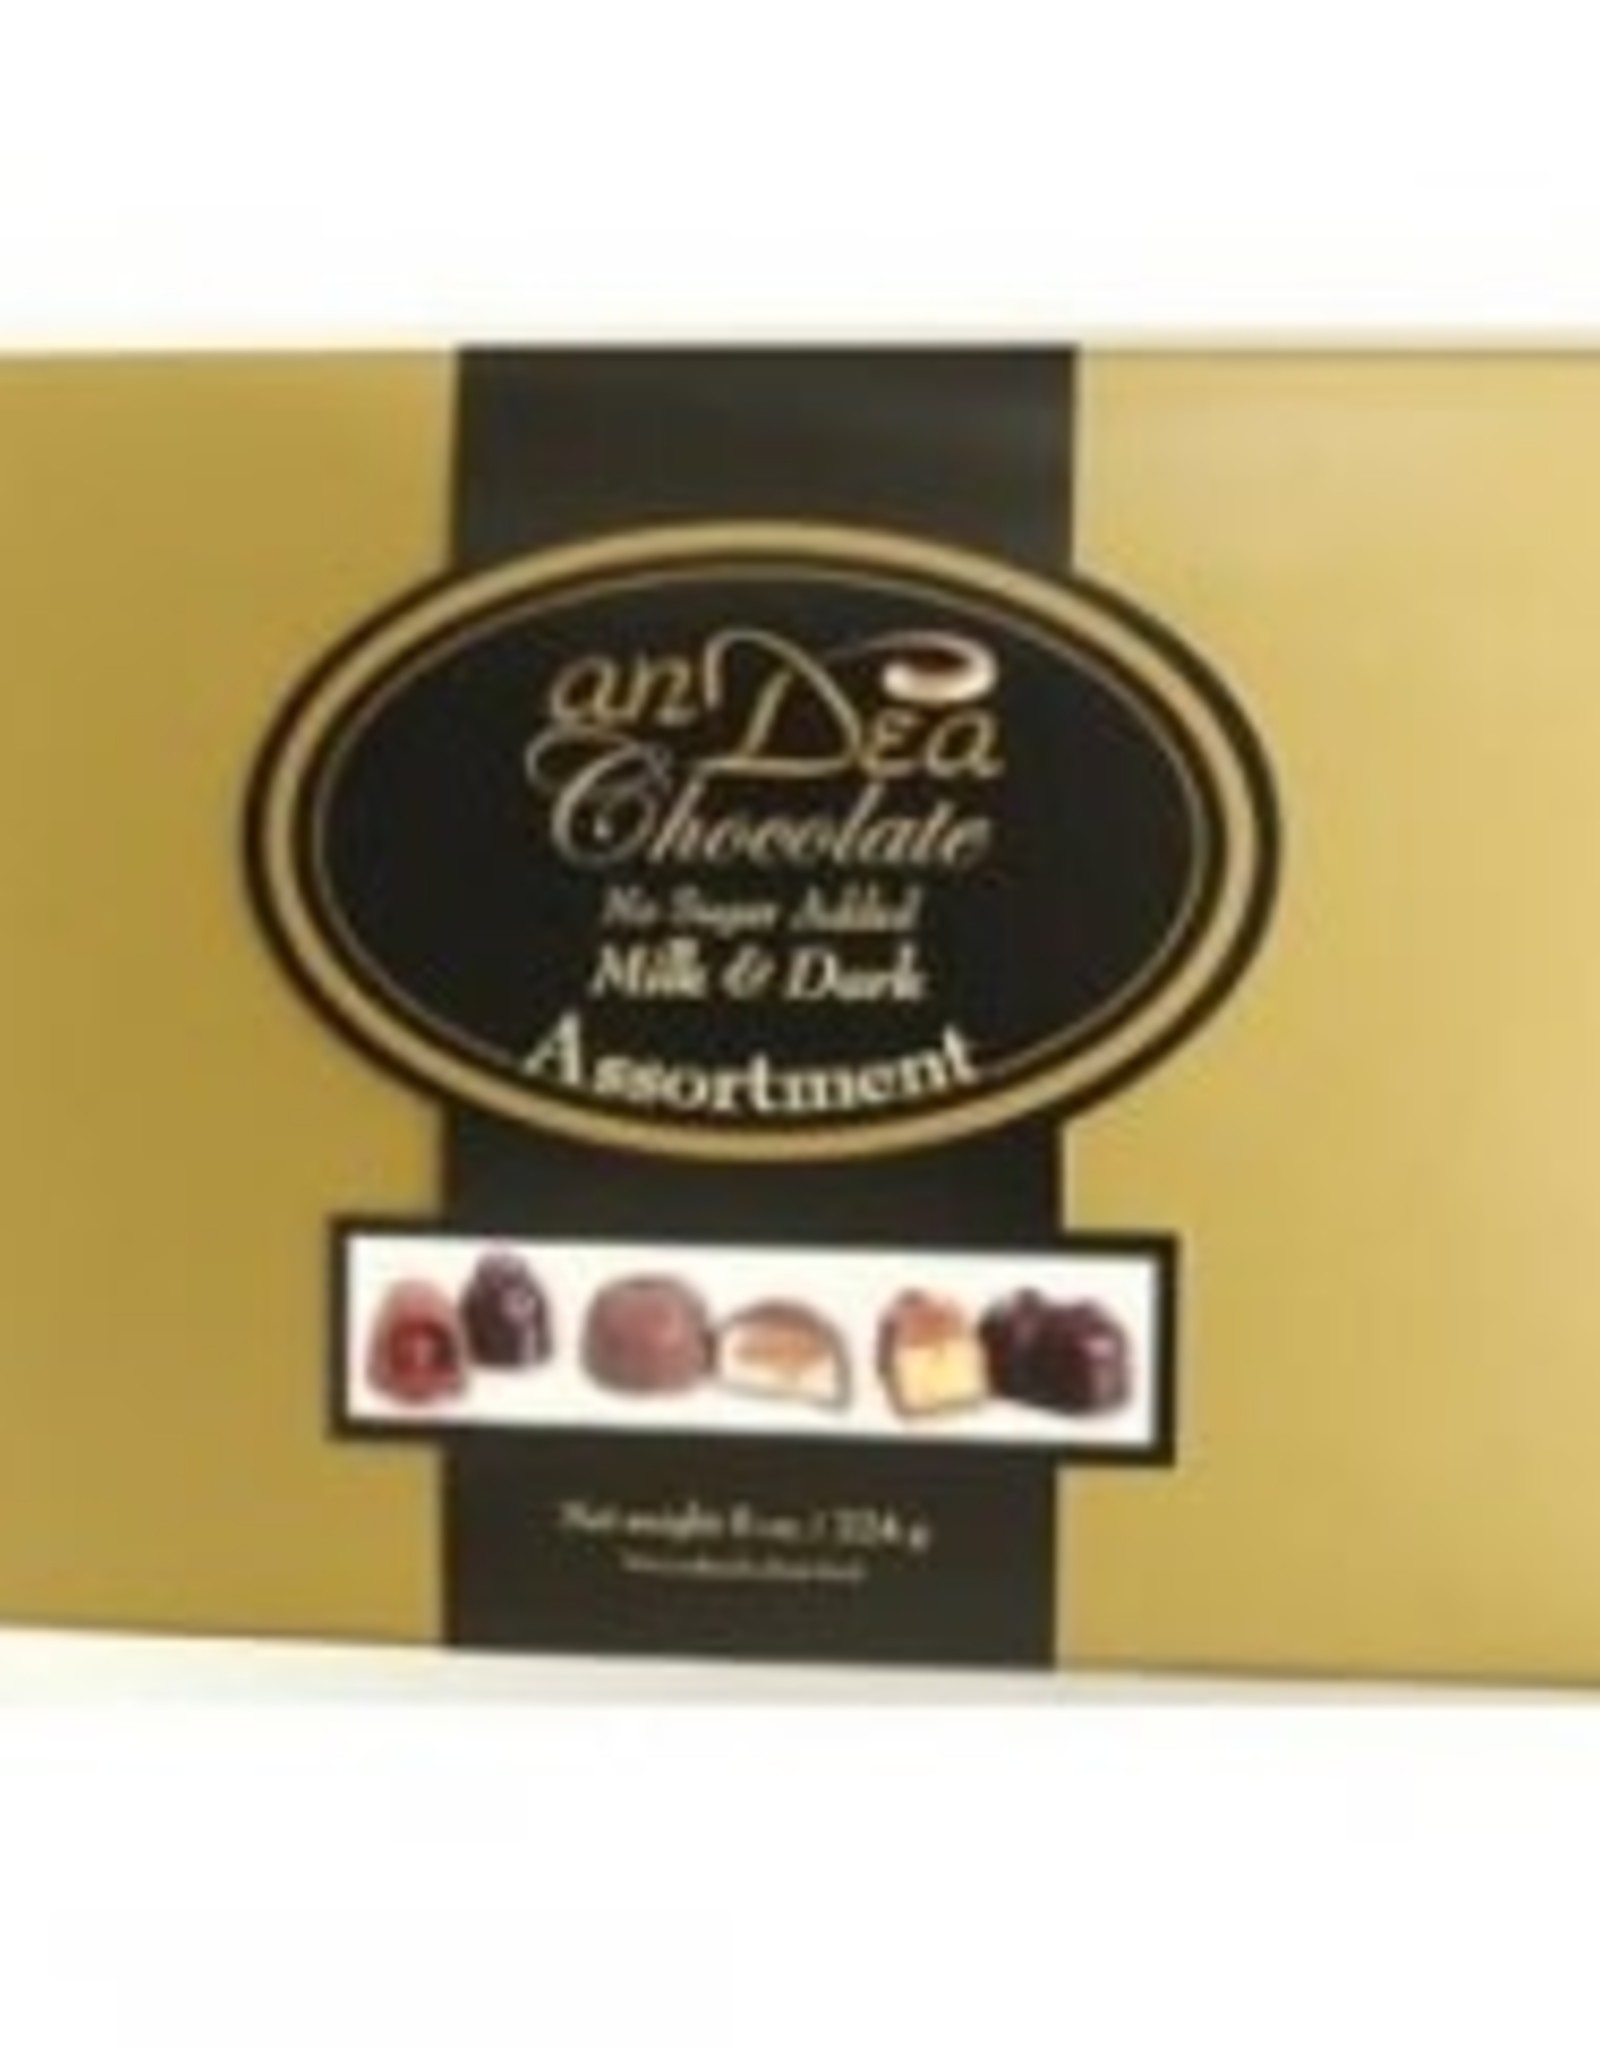 AnDea AnDea Chocolate Box 224g